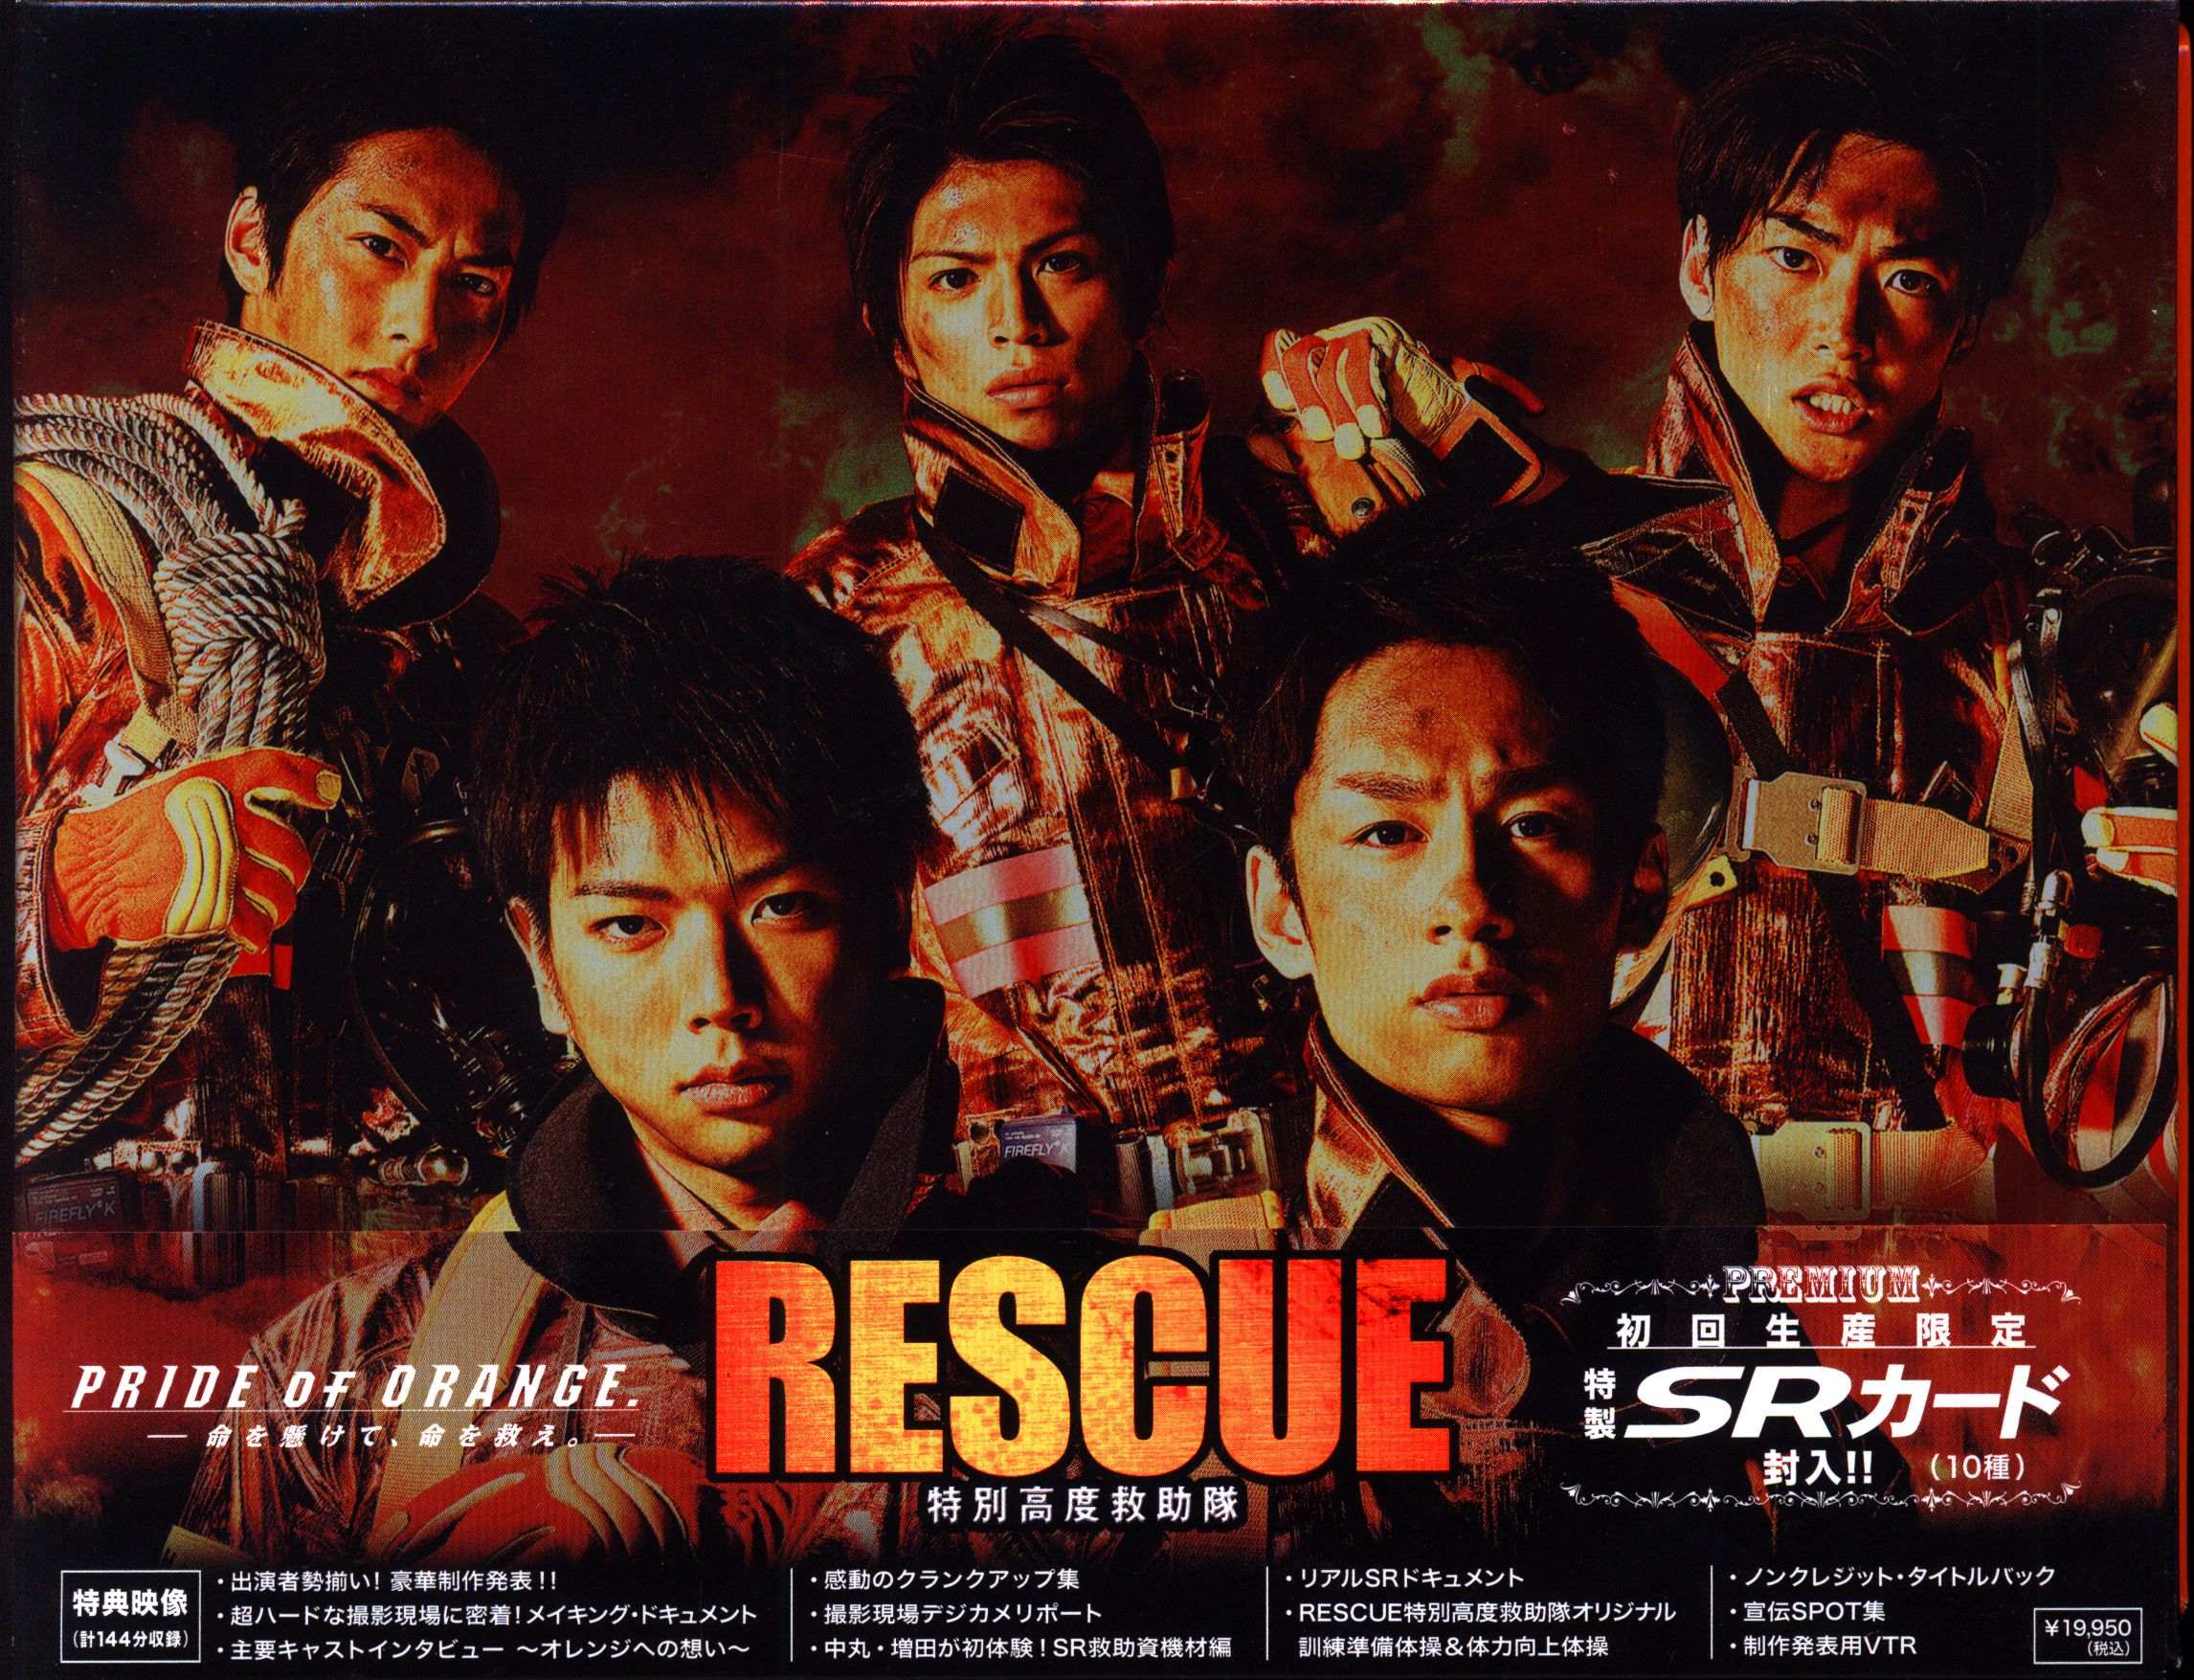 RESCUE隊の最高峰DVD